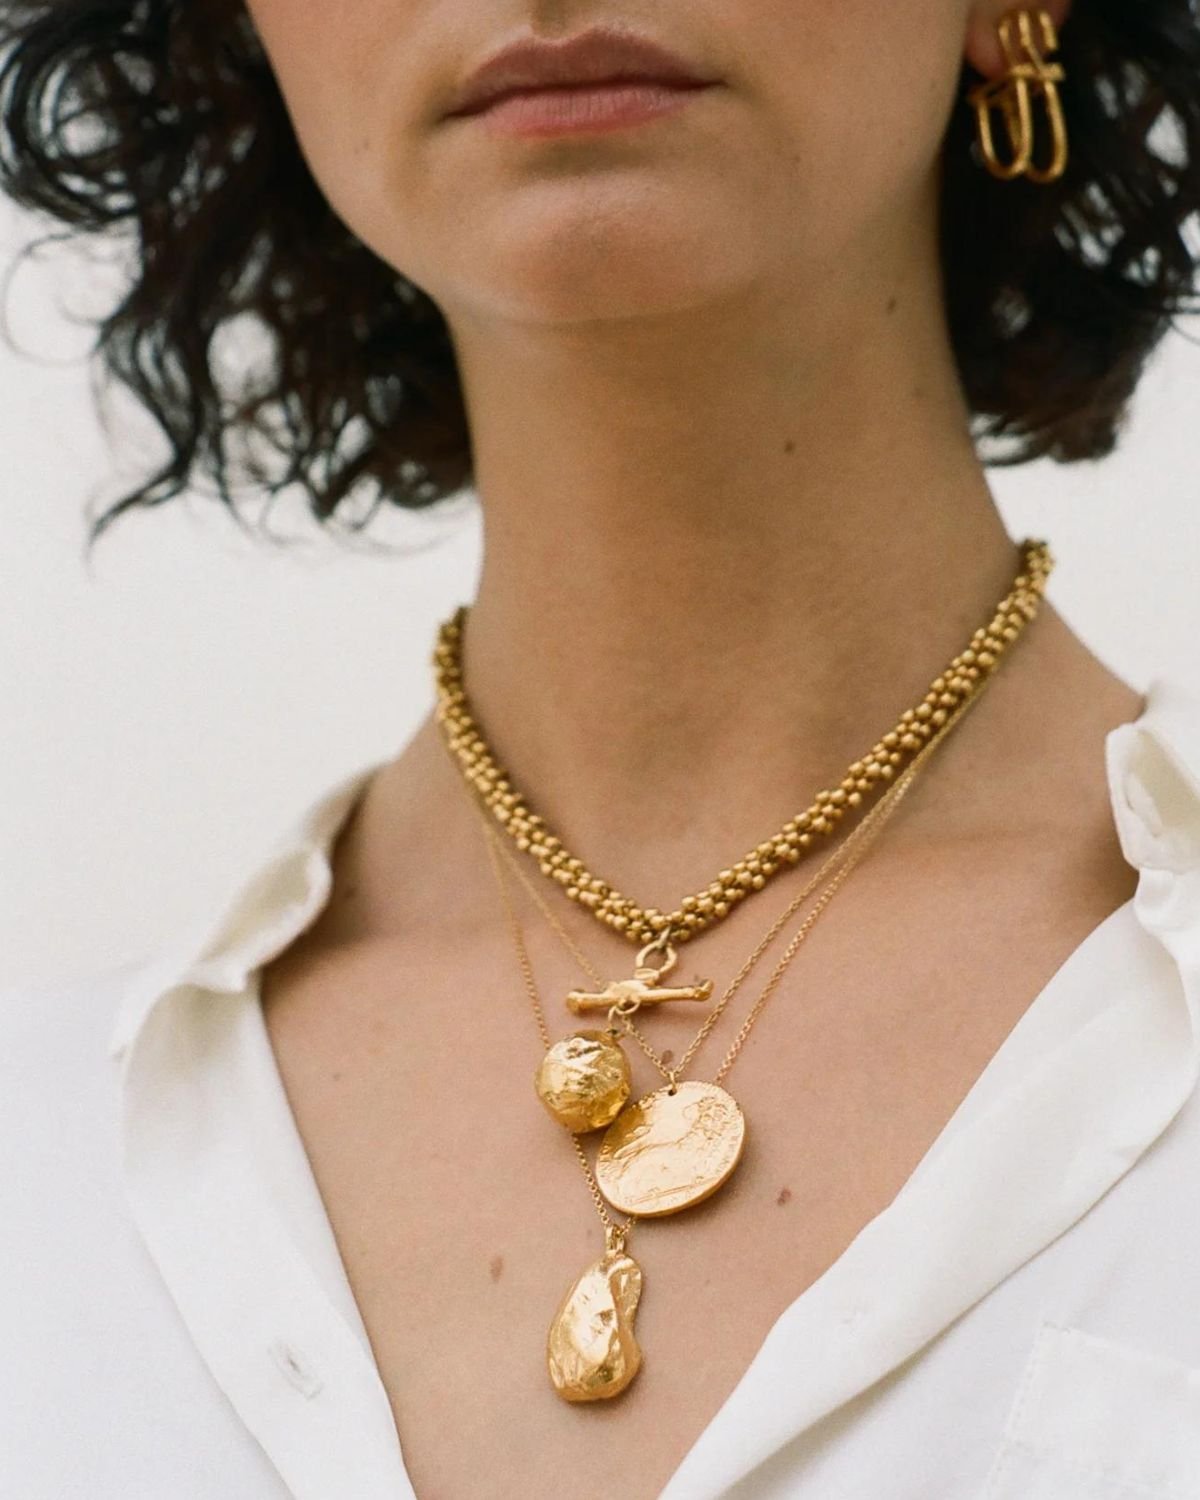 Box Chain, Precious Metal Necklaces & Jewelry Accessories